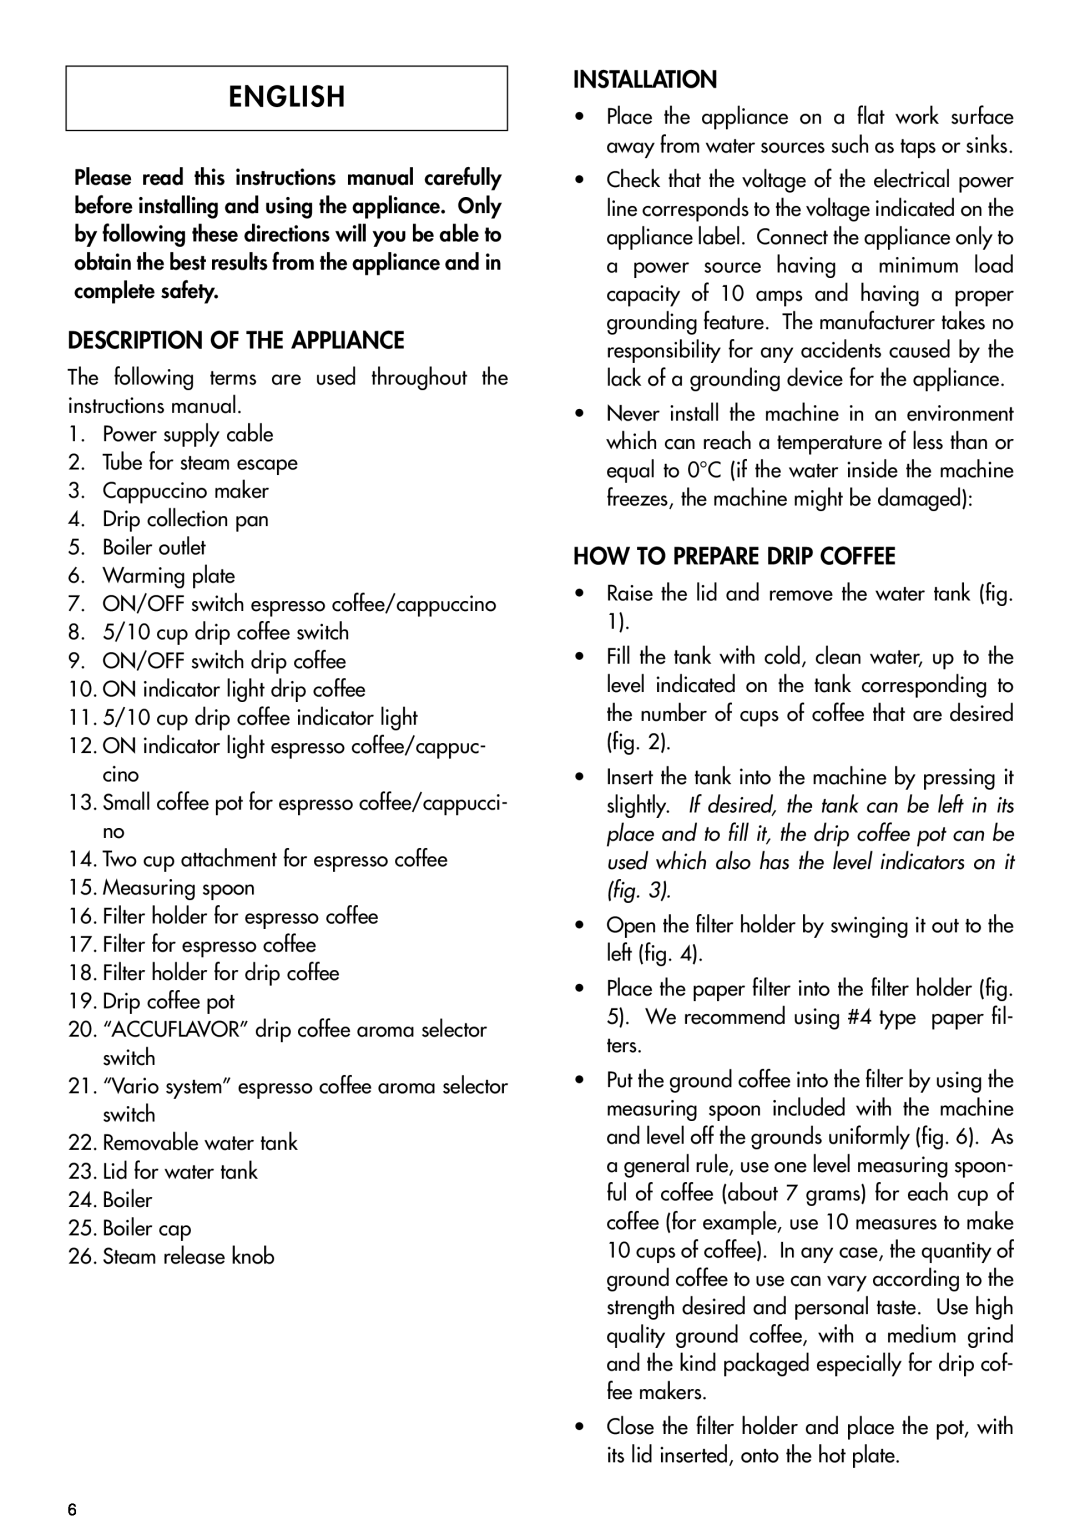 DeLonghi BCO70 manual English, Description Of The Appliance, Installation, How To Prepare Drip Coffee 